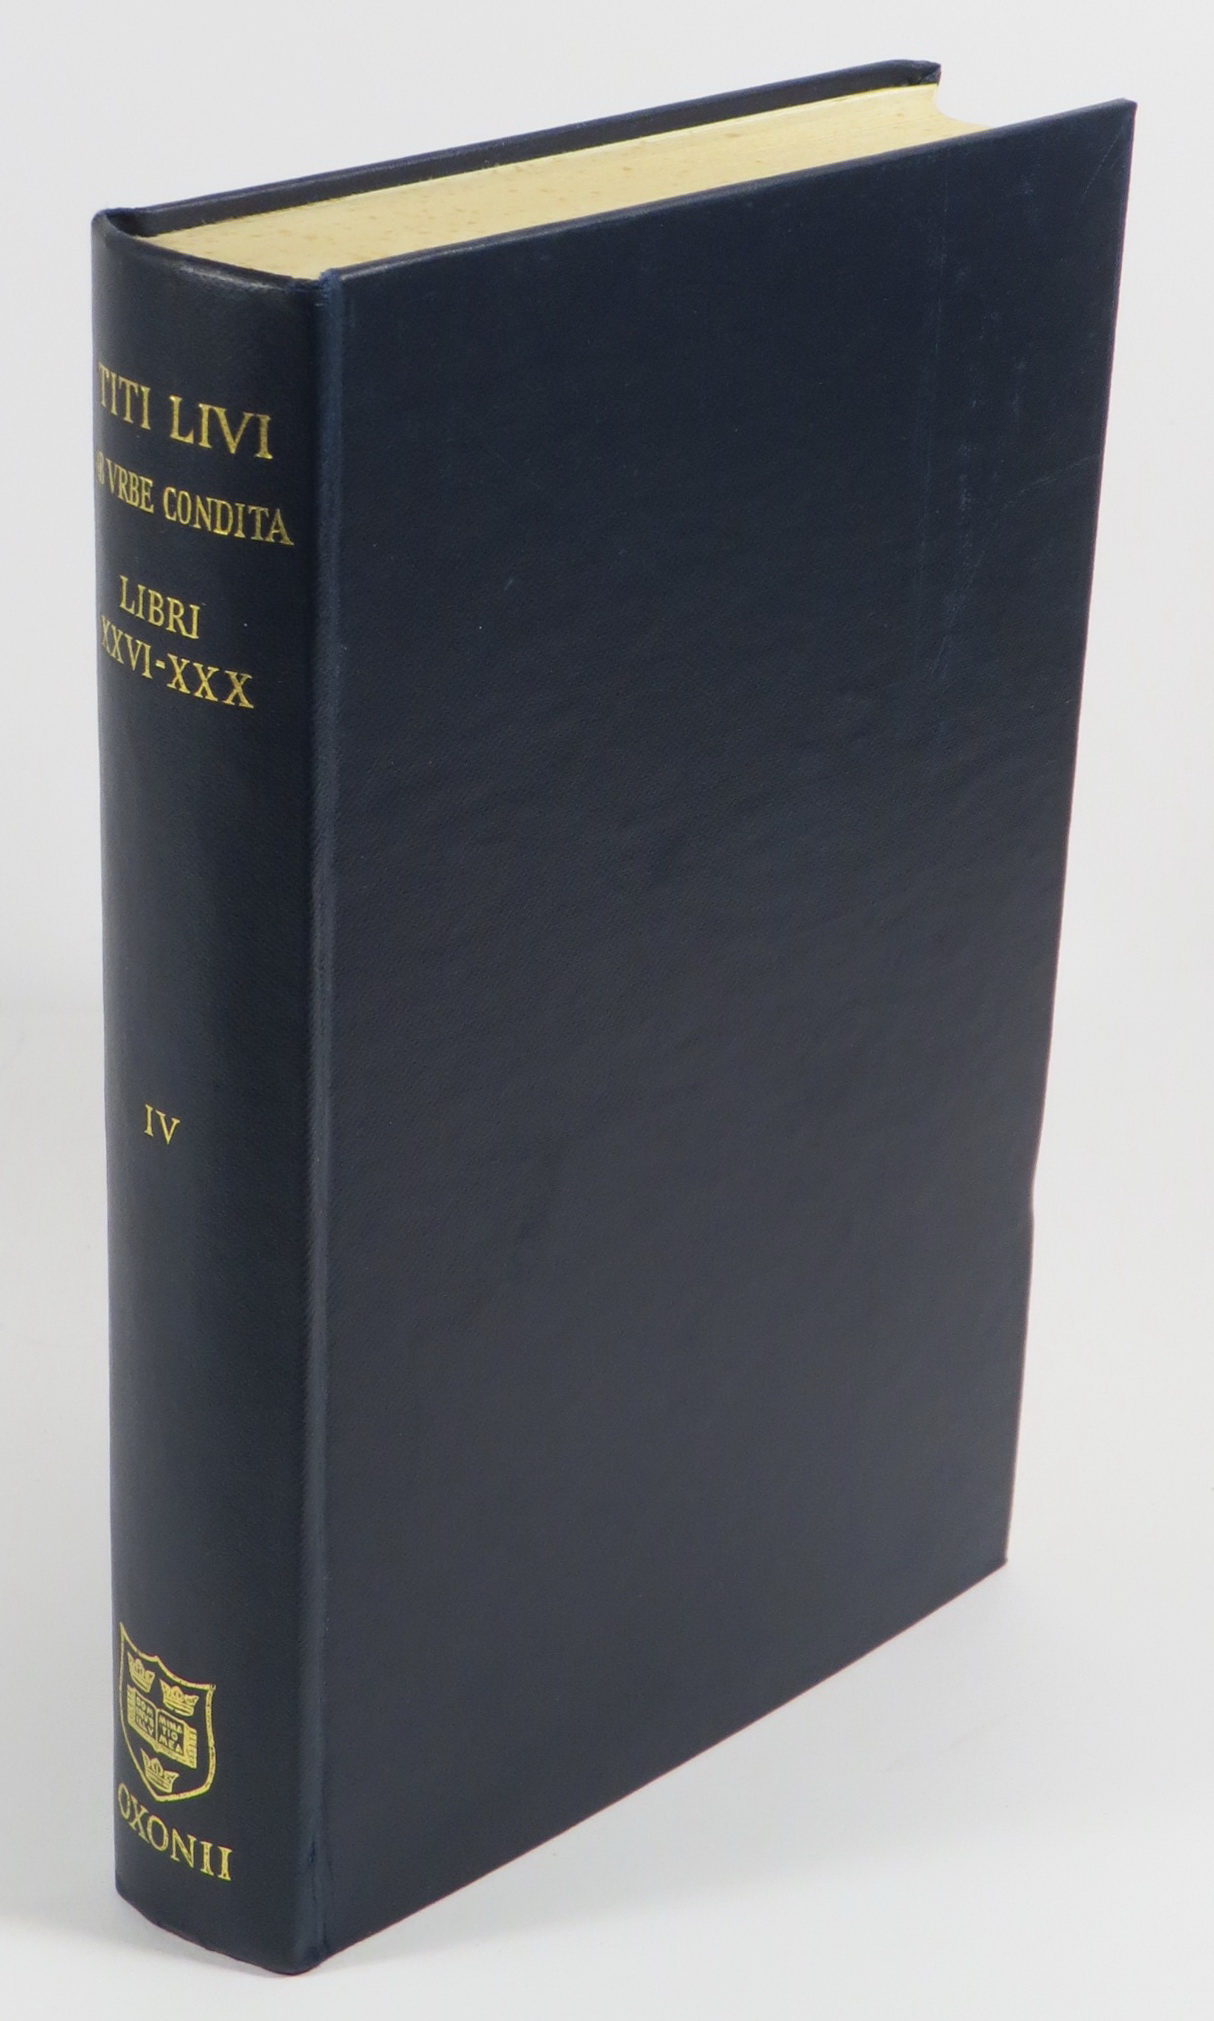 Pre-Owned Livy: Book XXX (Paperback 9781853996795) by Livy, H E